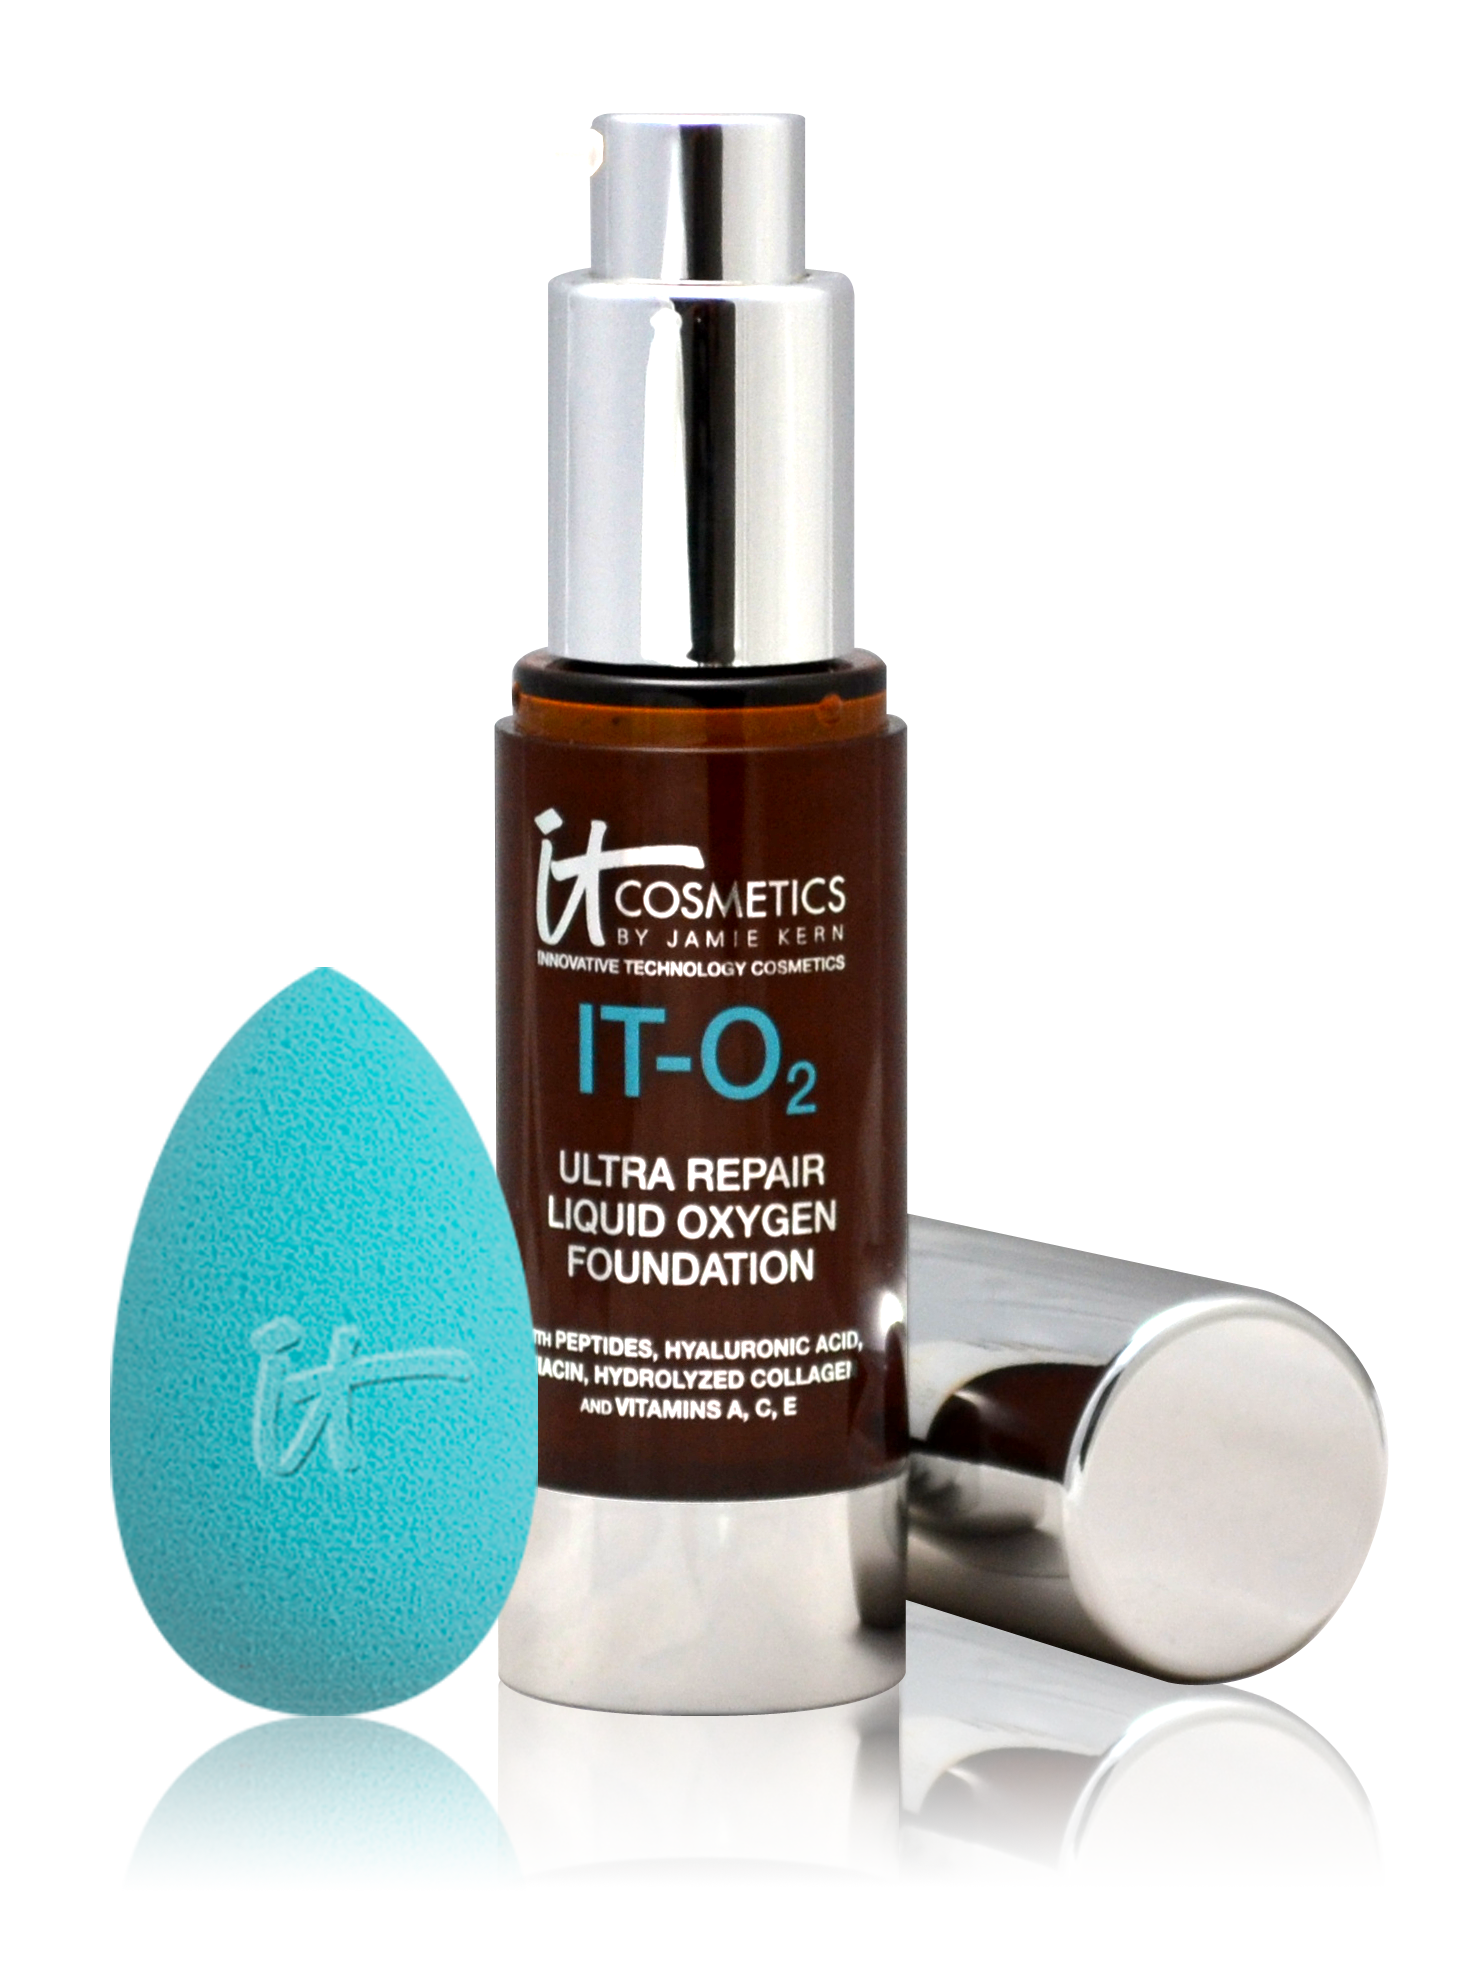 IT-02 Ultra Repair Liquid Oxygen Foundation by iT Cosmetics